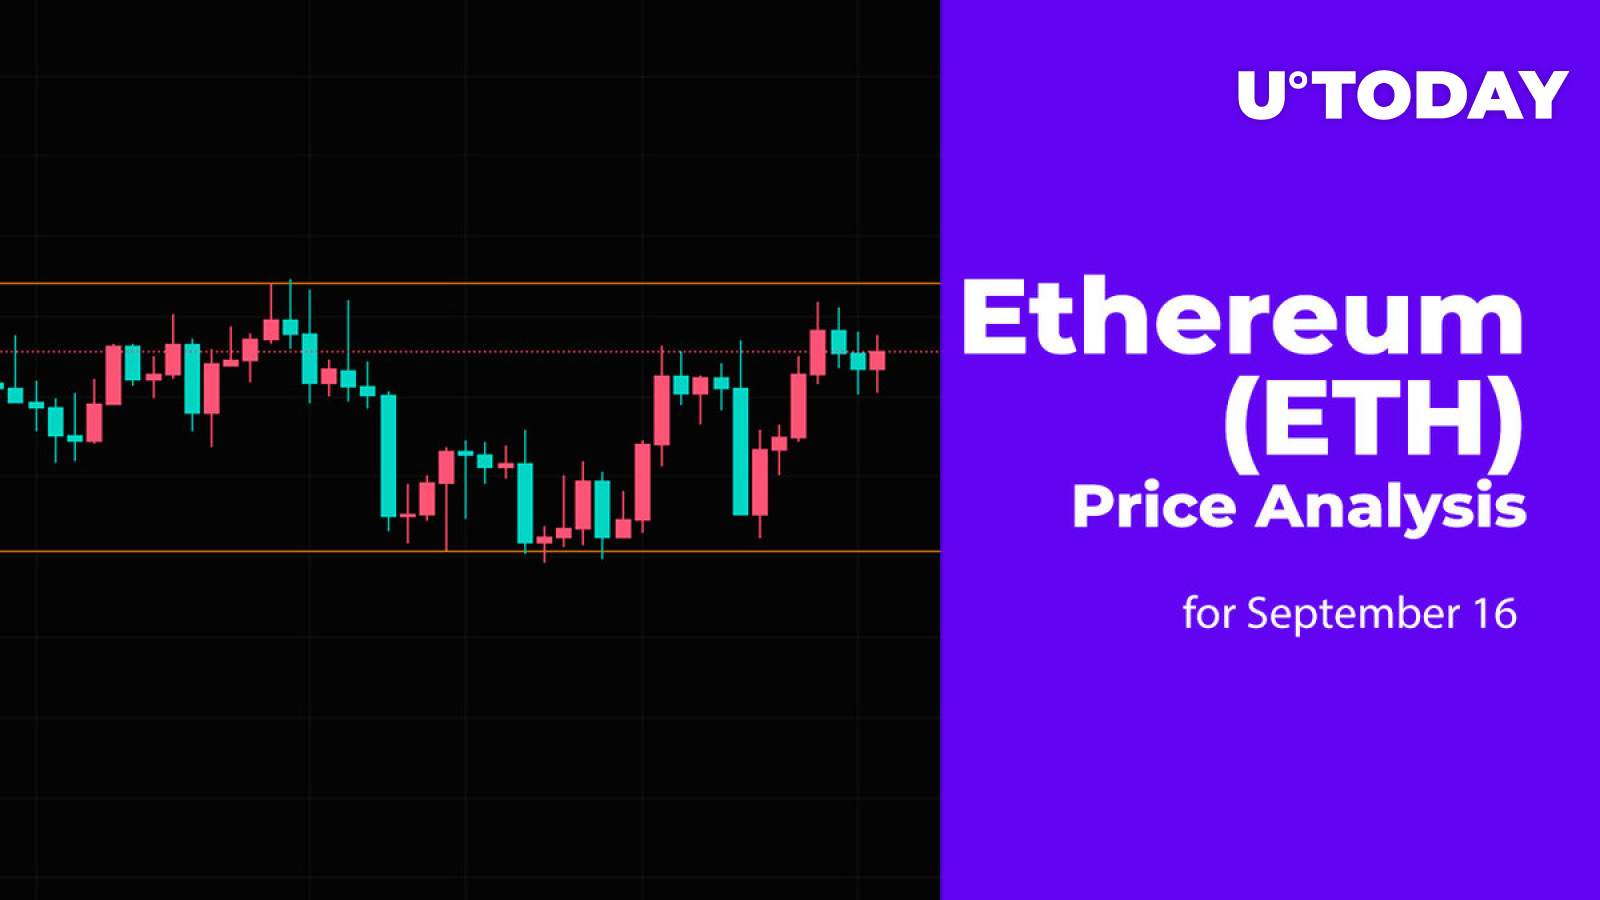 Ethereum (ETH) Price Analysis for September 16